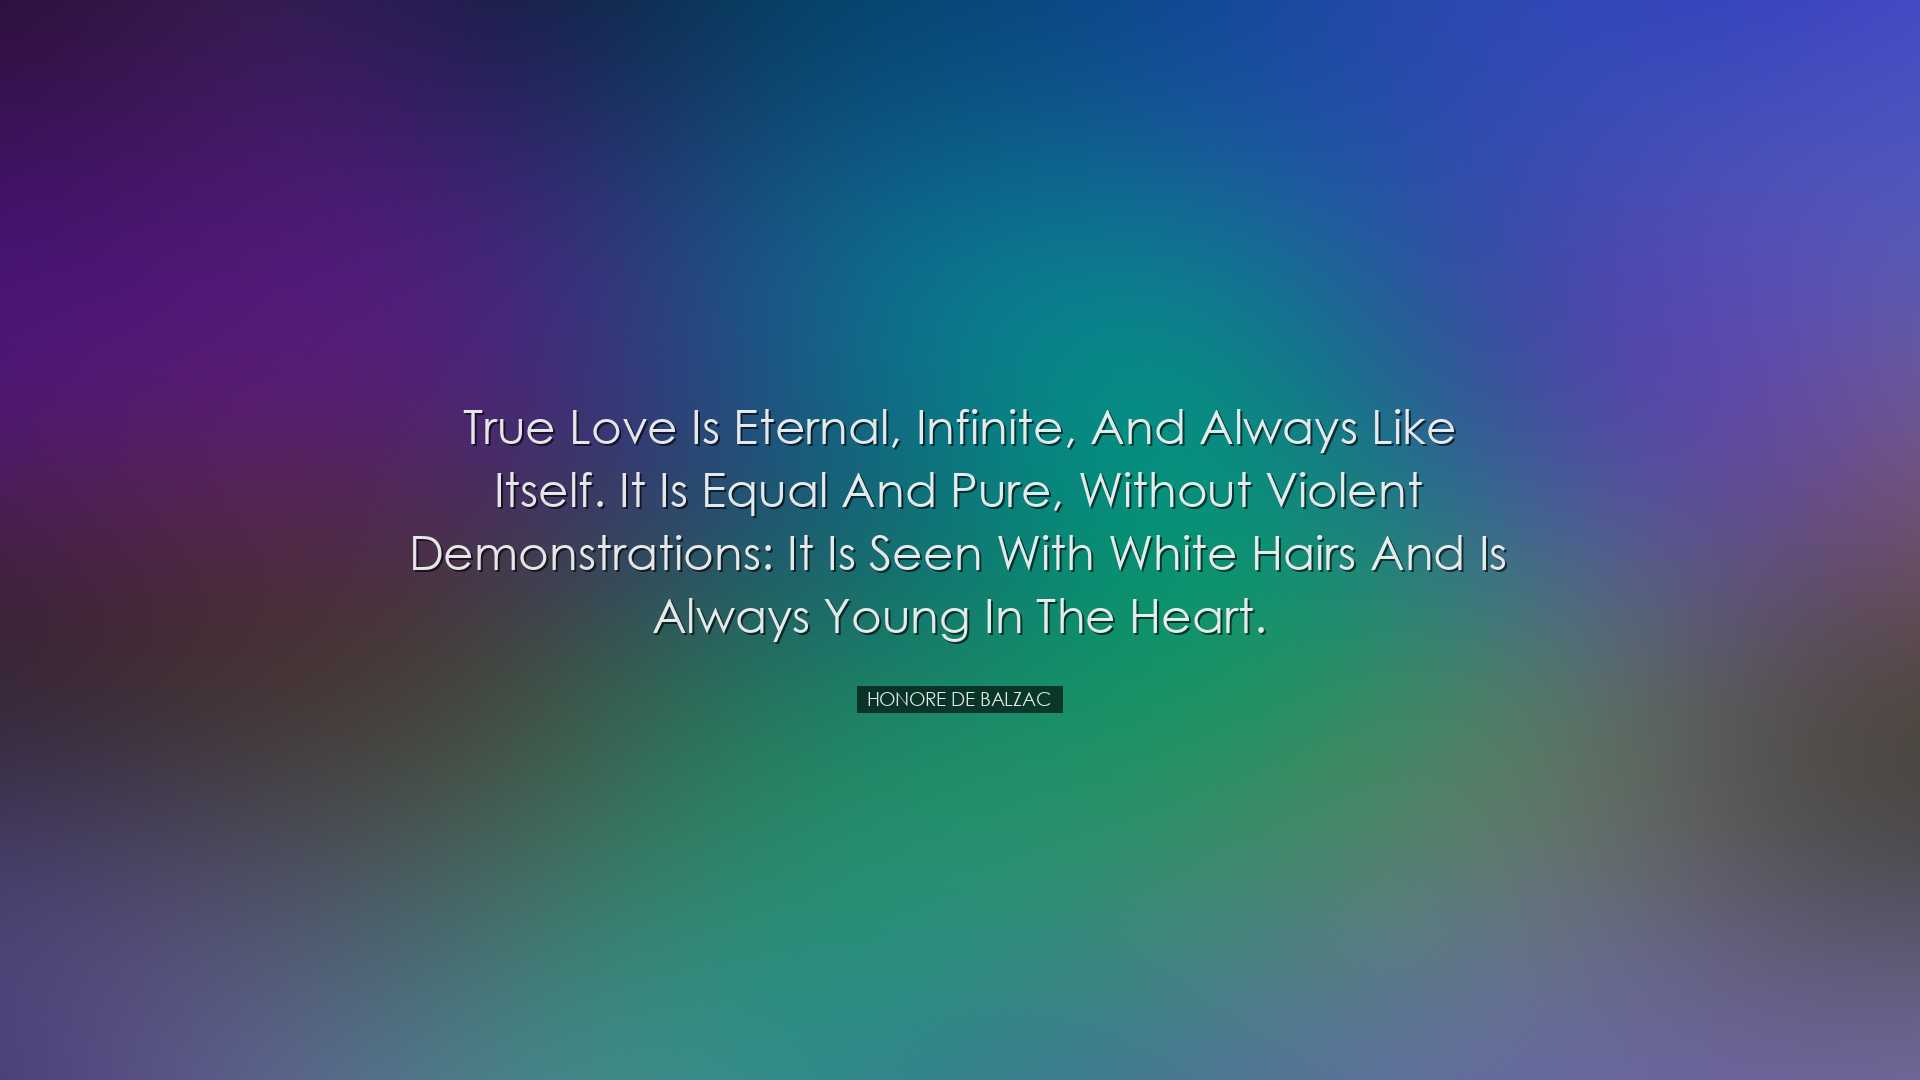 True love is eternal, infinite, and always like itself. It is equa